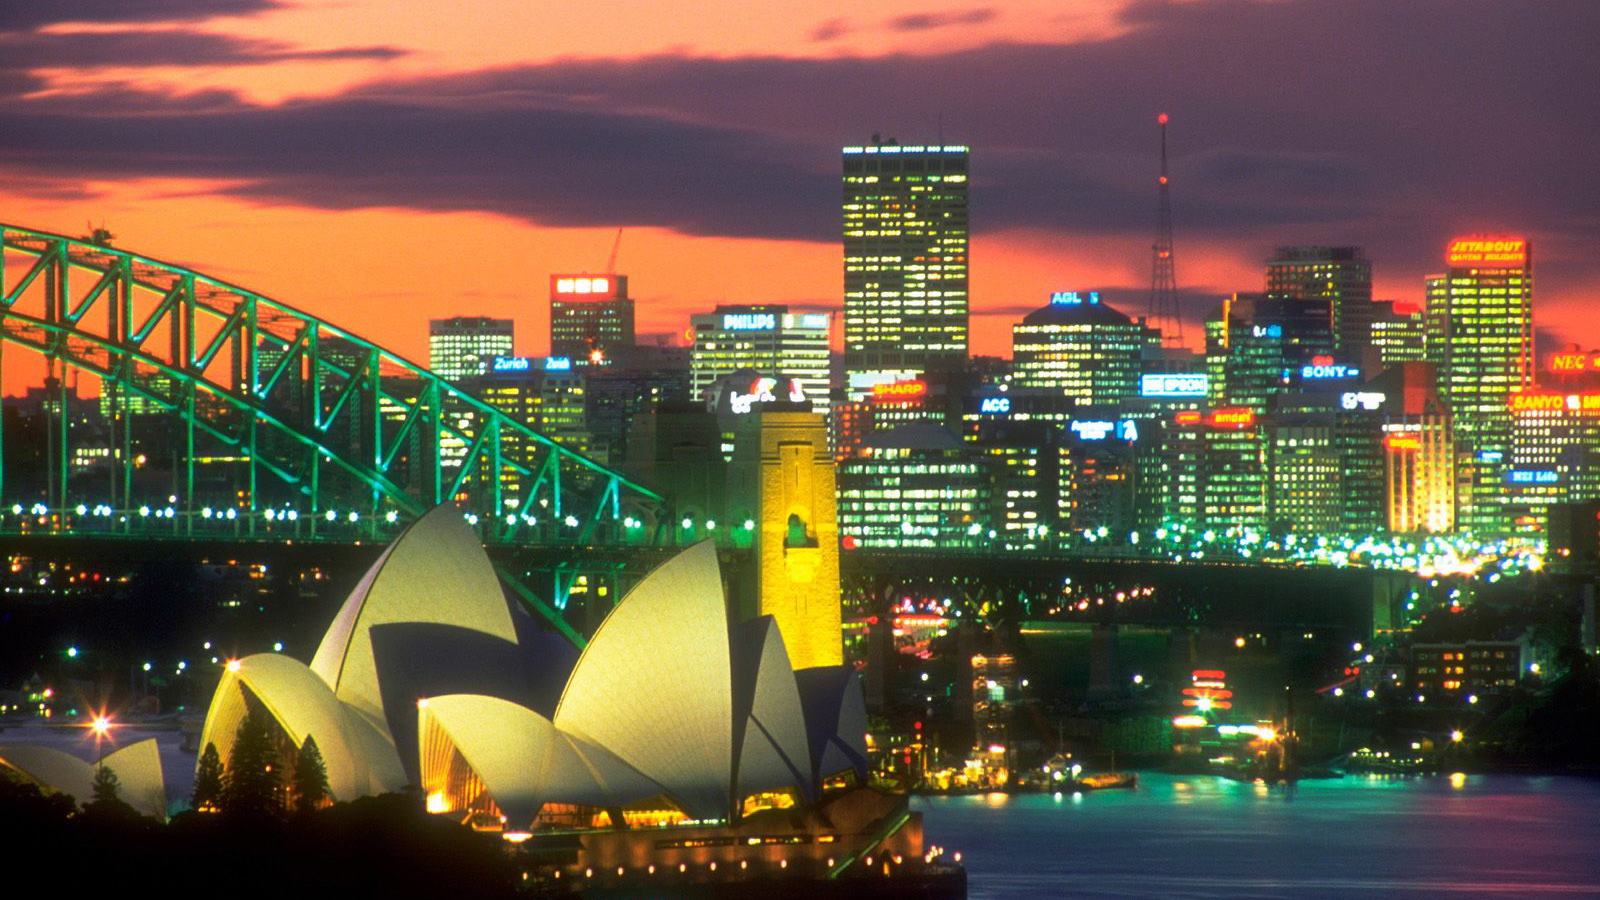 The lights of Sydney